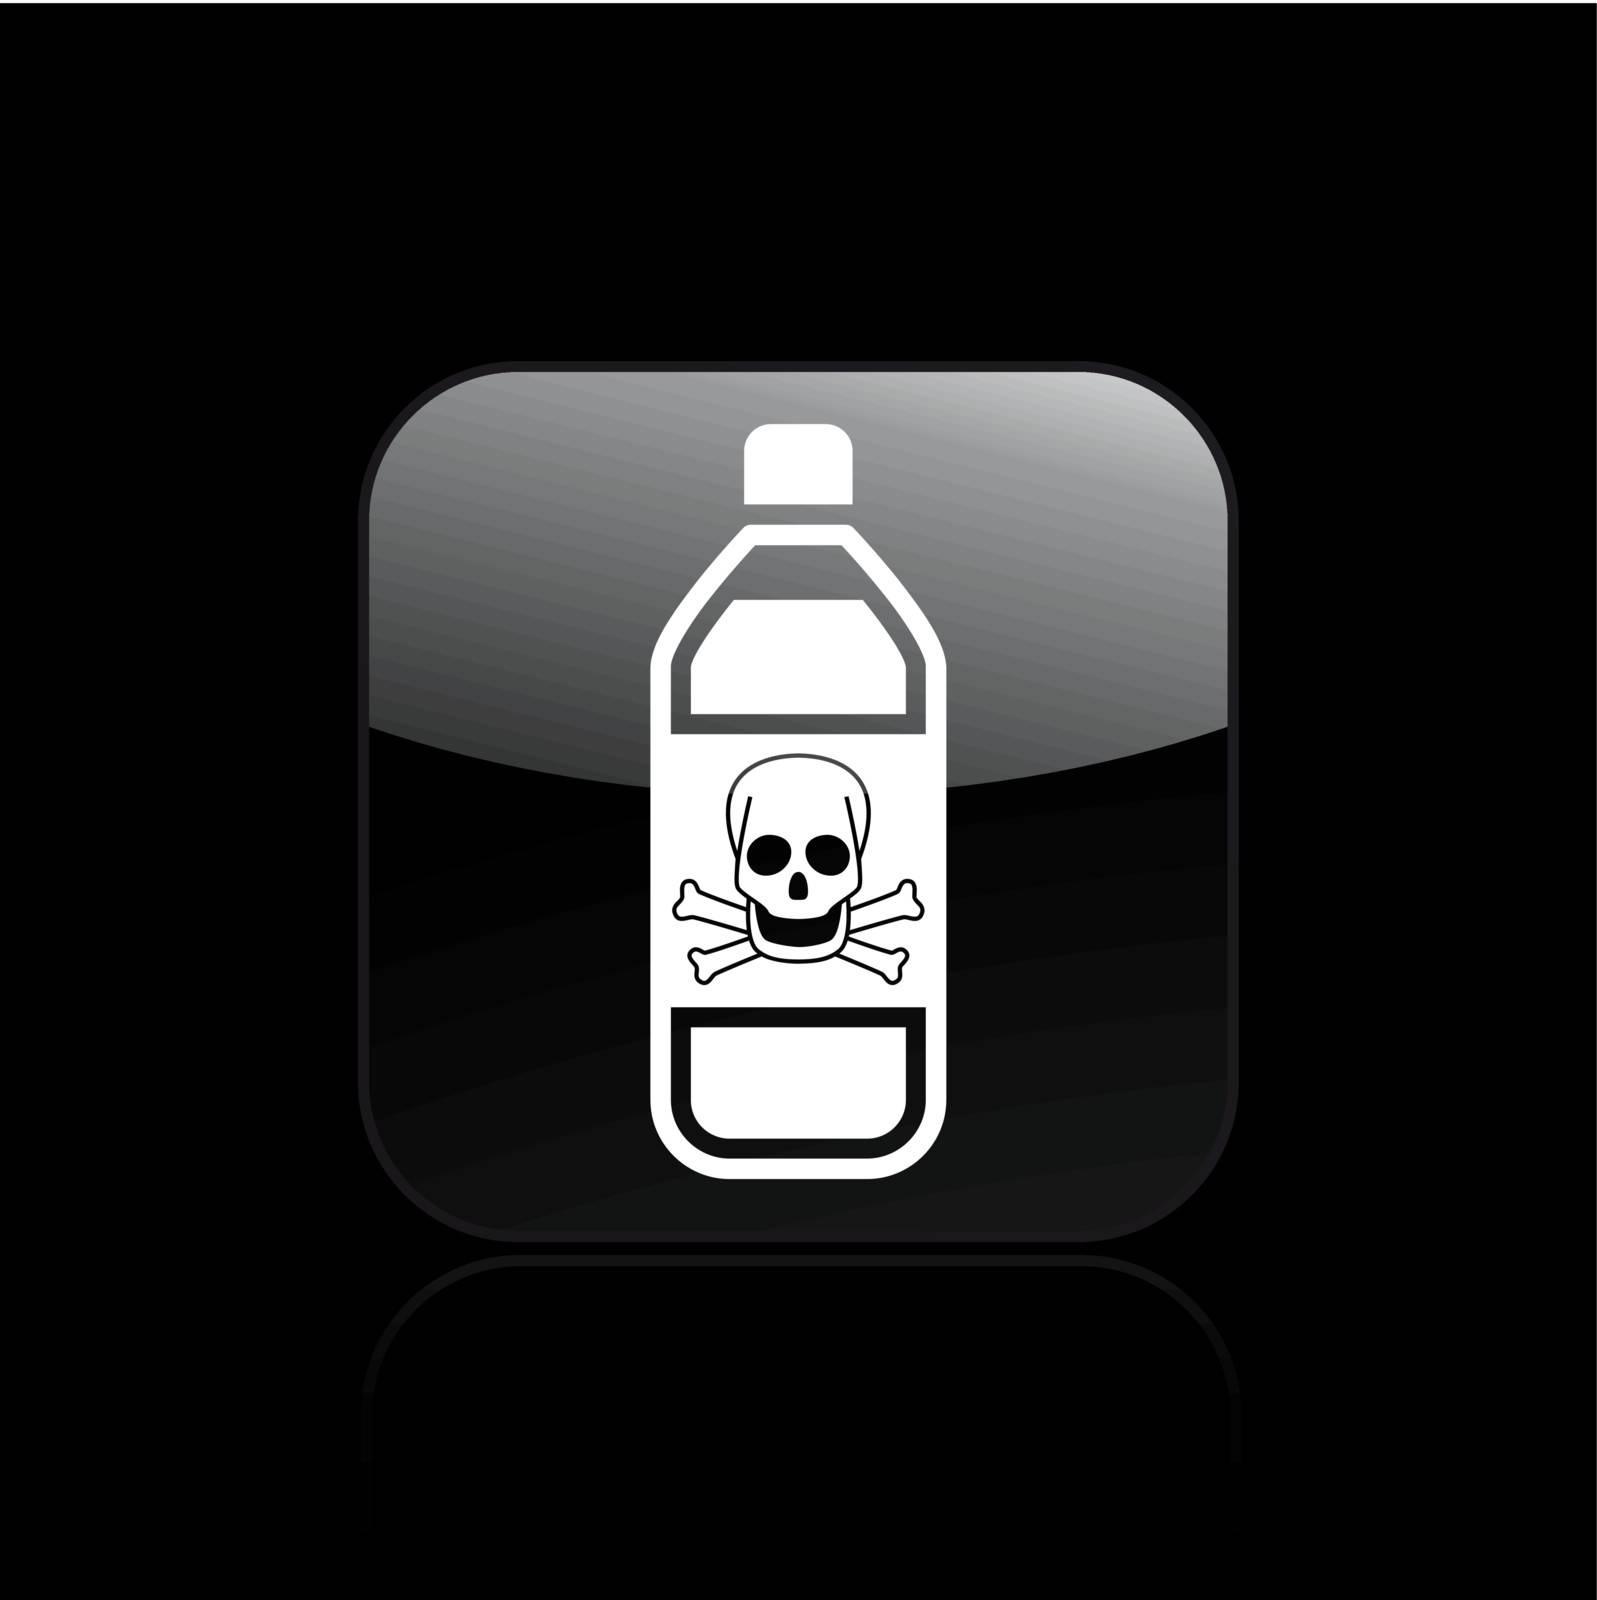 Vector illustration of single isolated dangerous bottle icon 